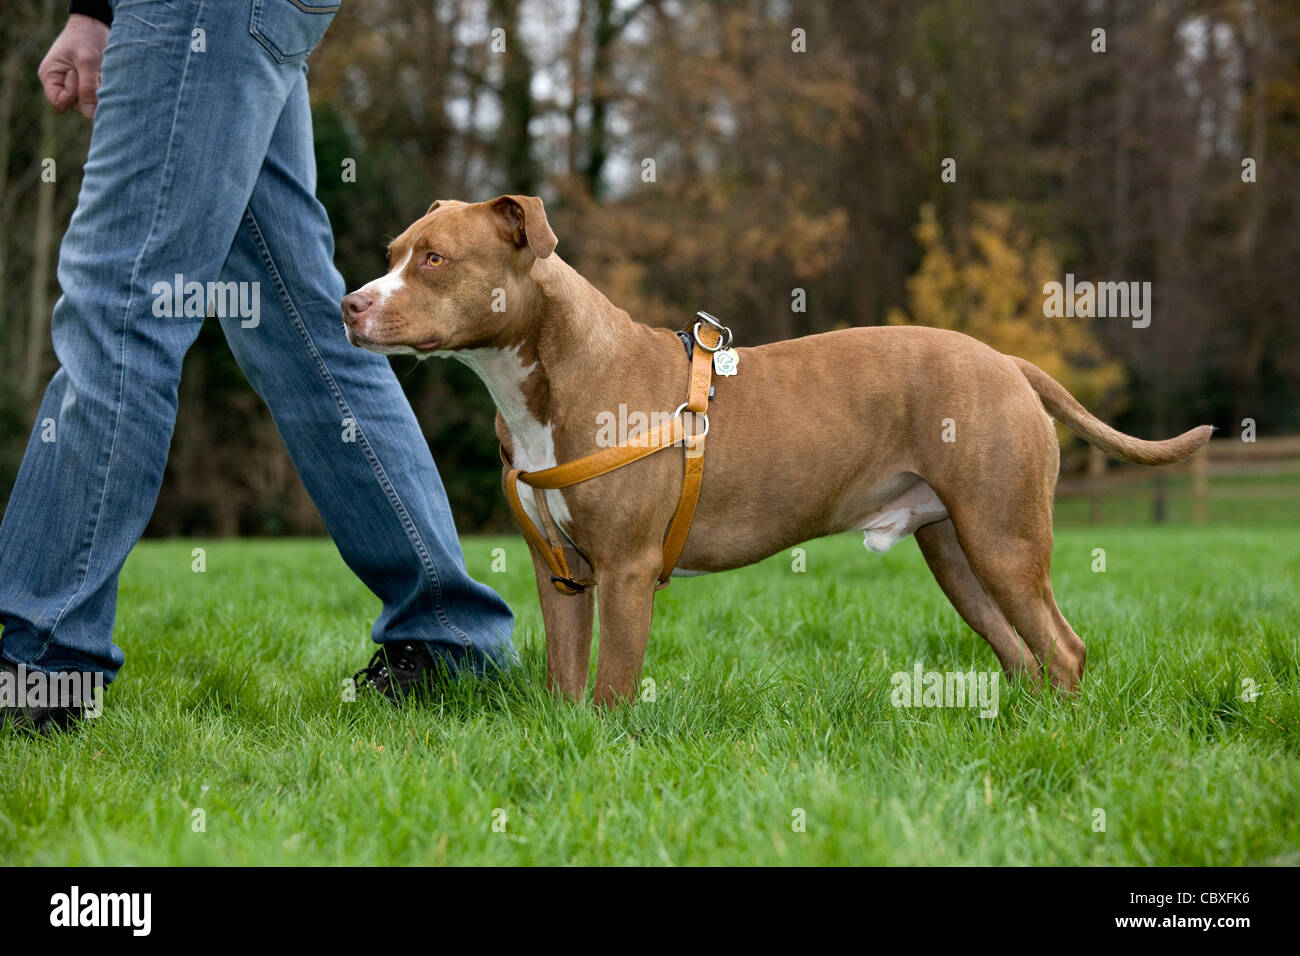 American Staffordshire Terrier dog wearing faisceau dans jardin Banque D'Images